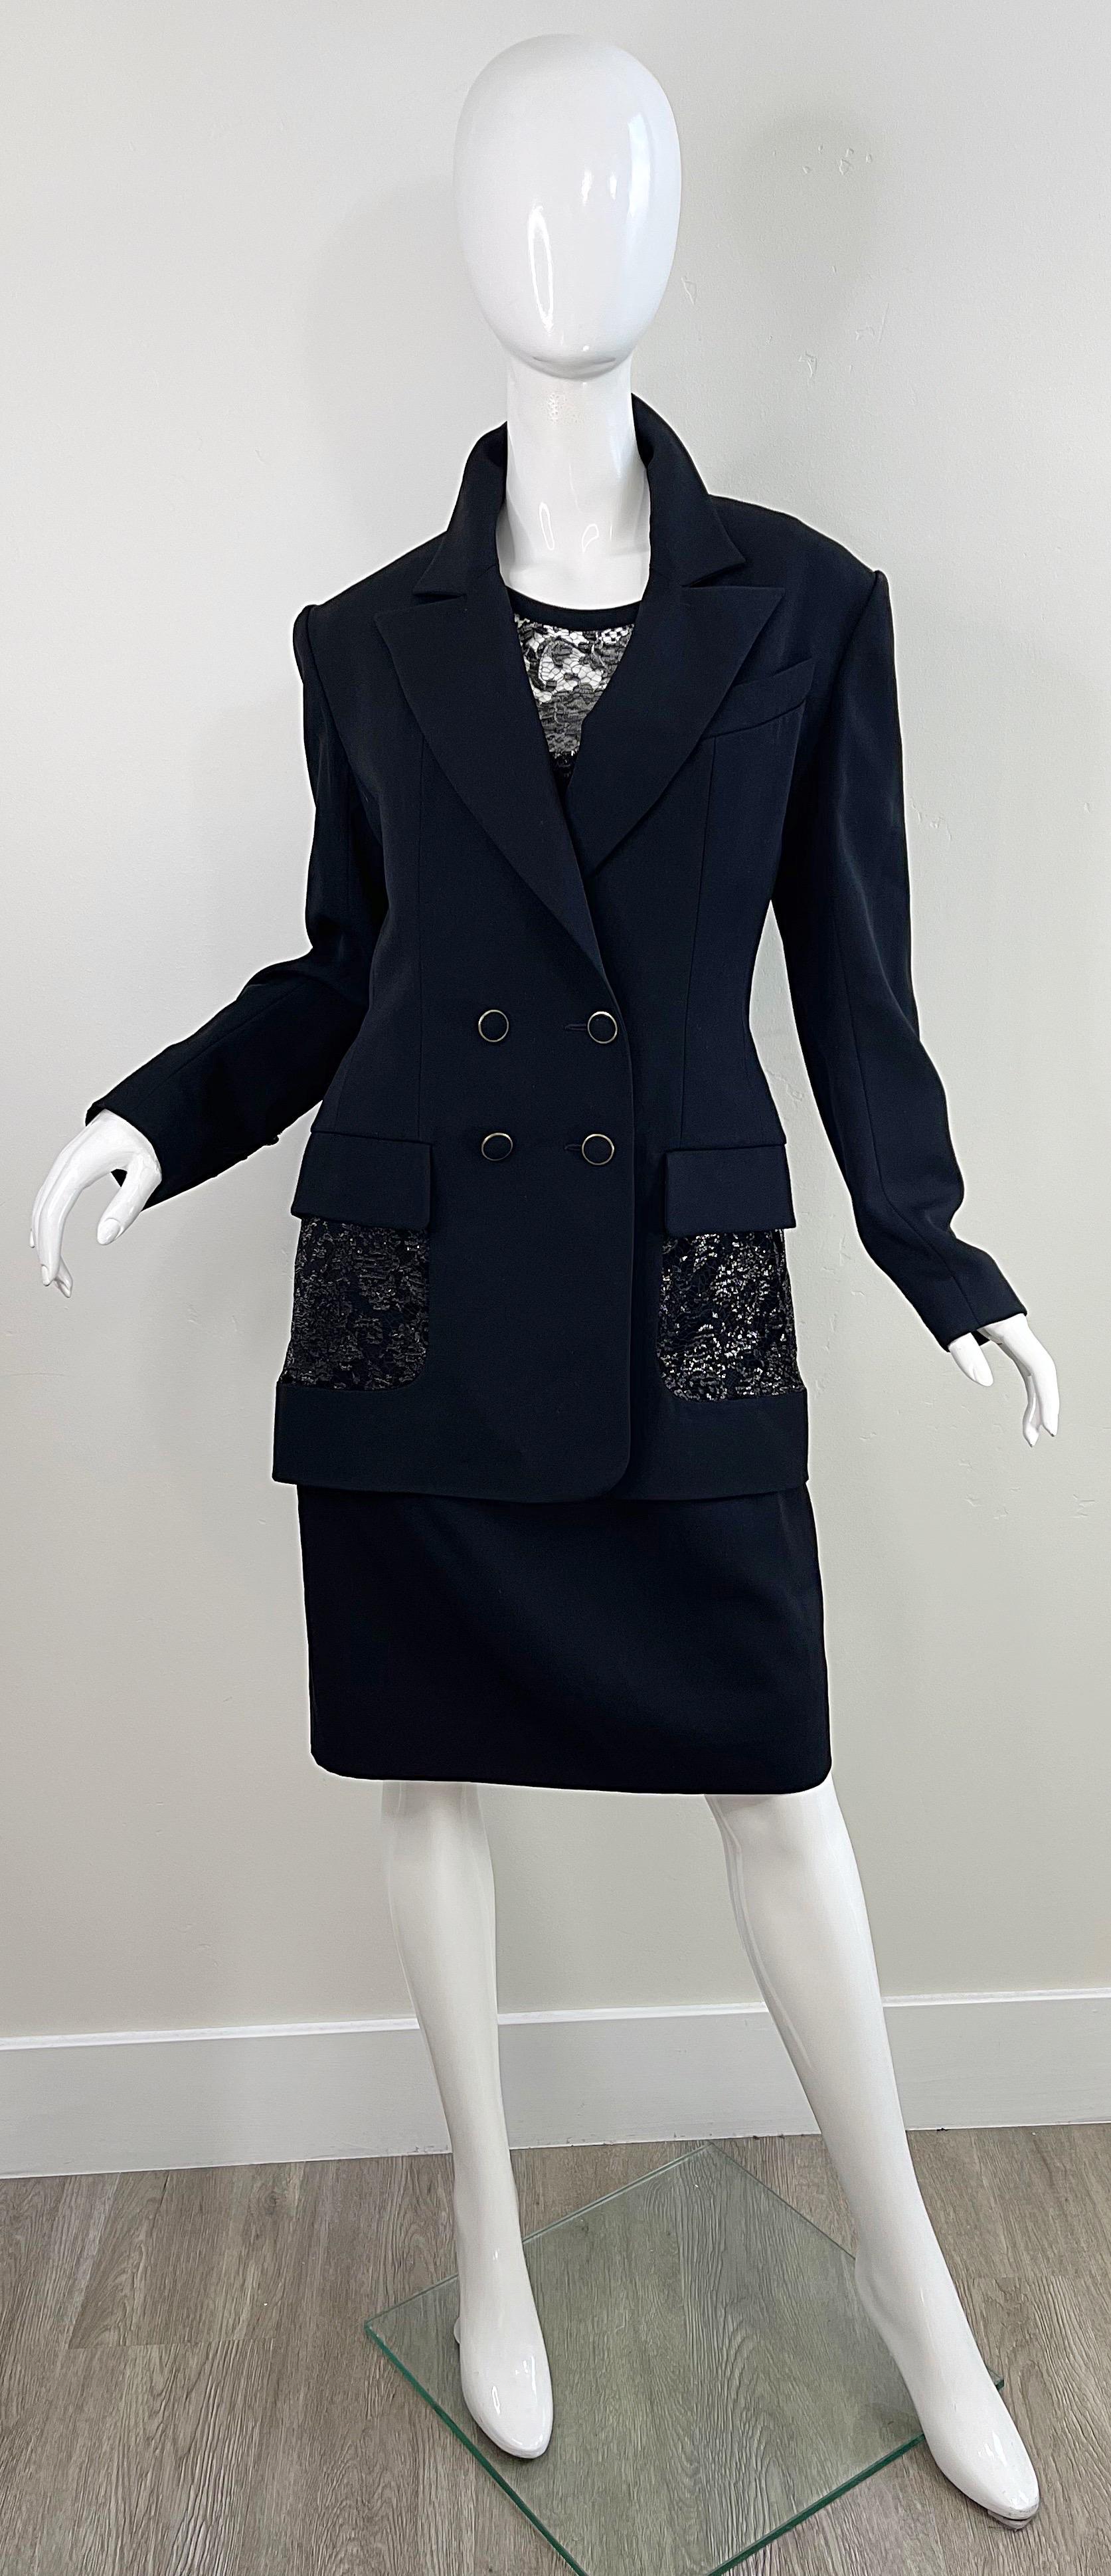 Karl Lagerfeld 1980s Black Lace Cut - Out Size 44 / 10 12 Vintage Dress + Jacket For Sale 10